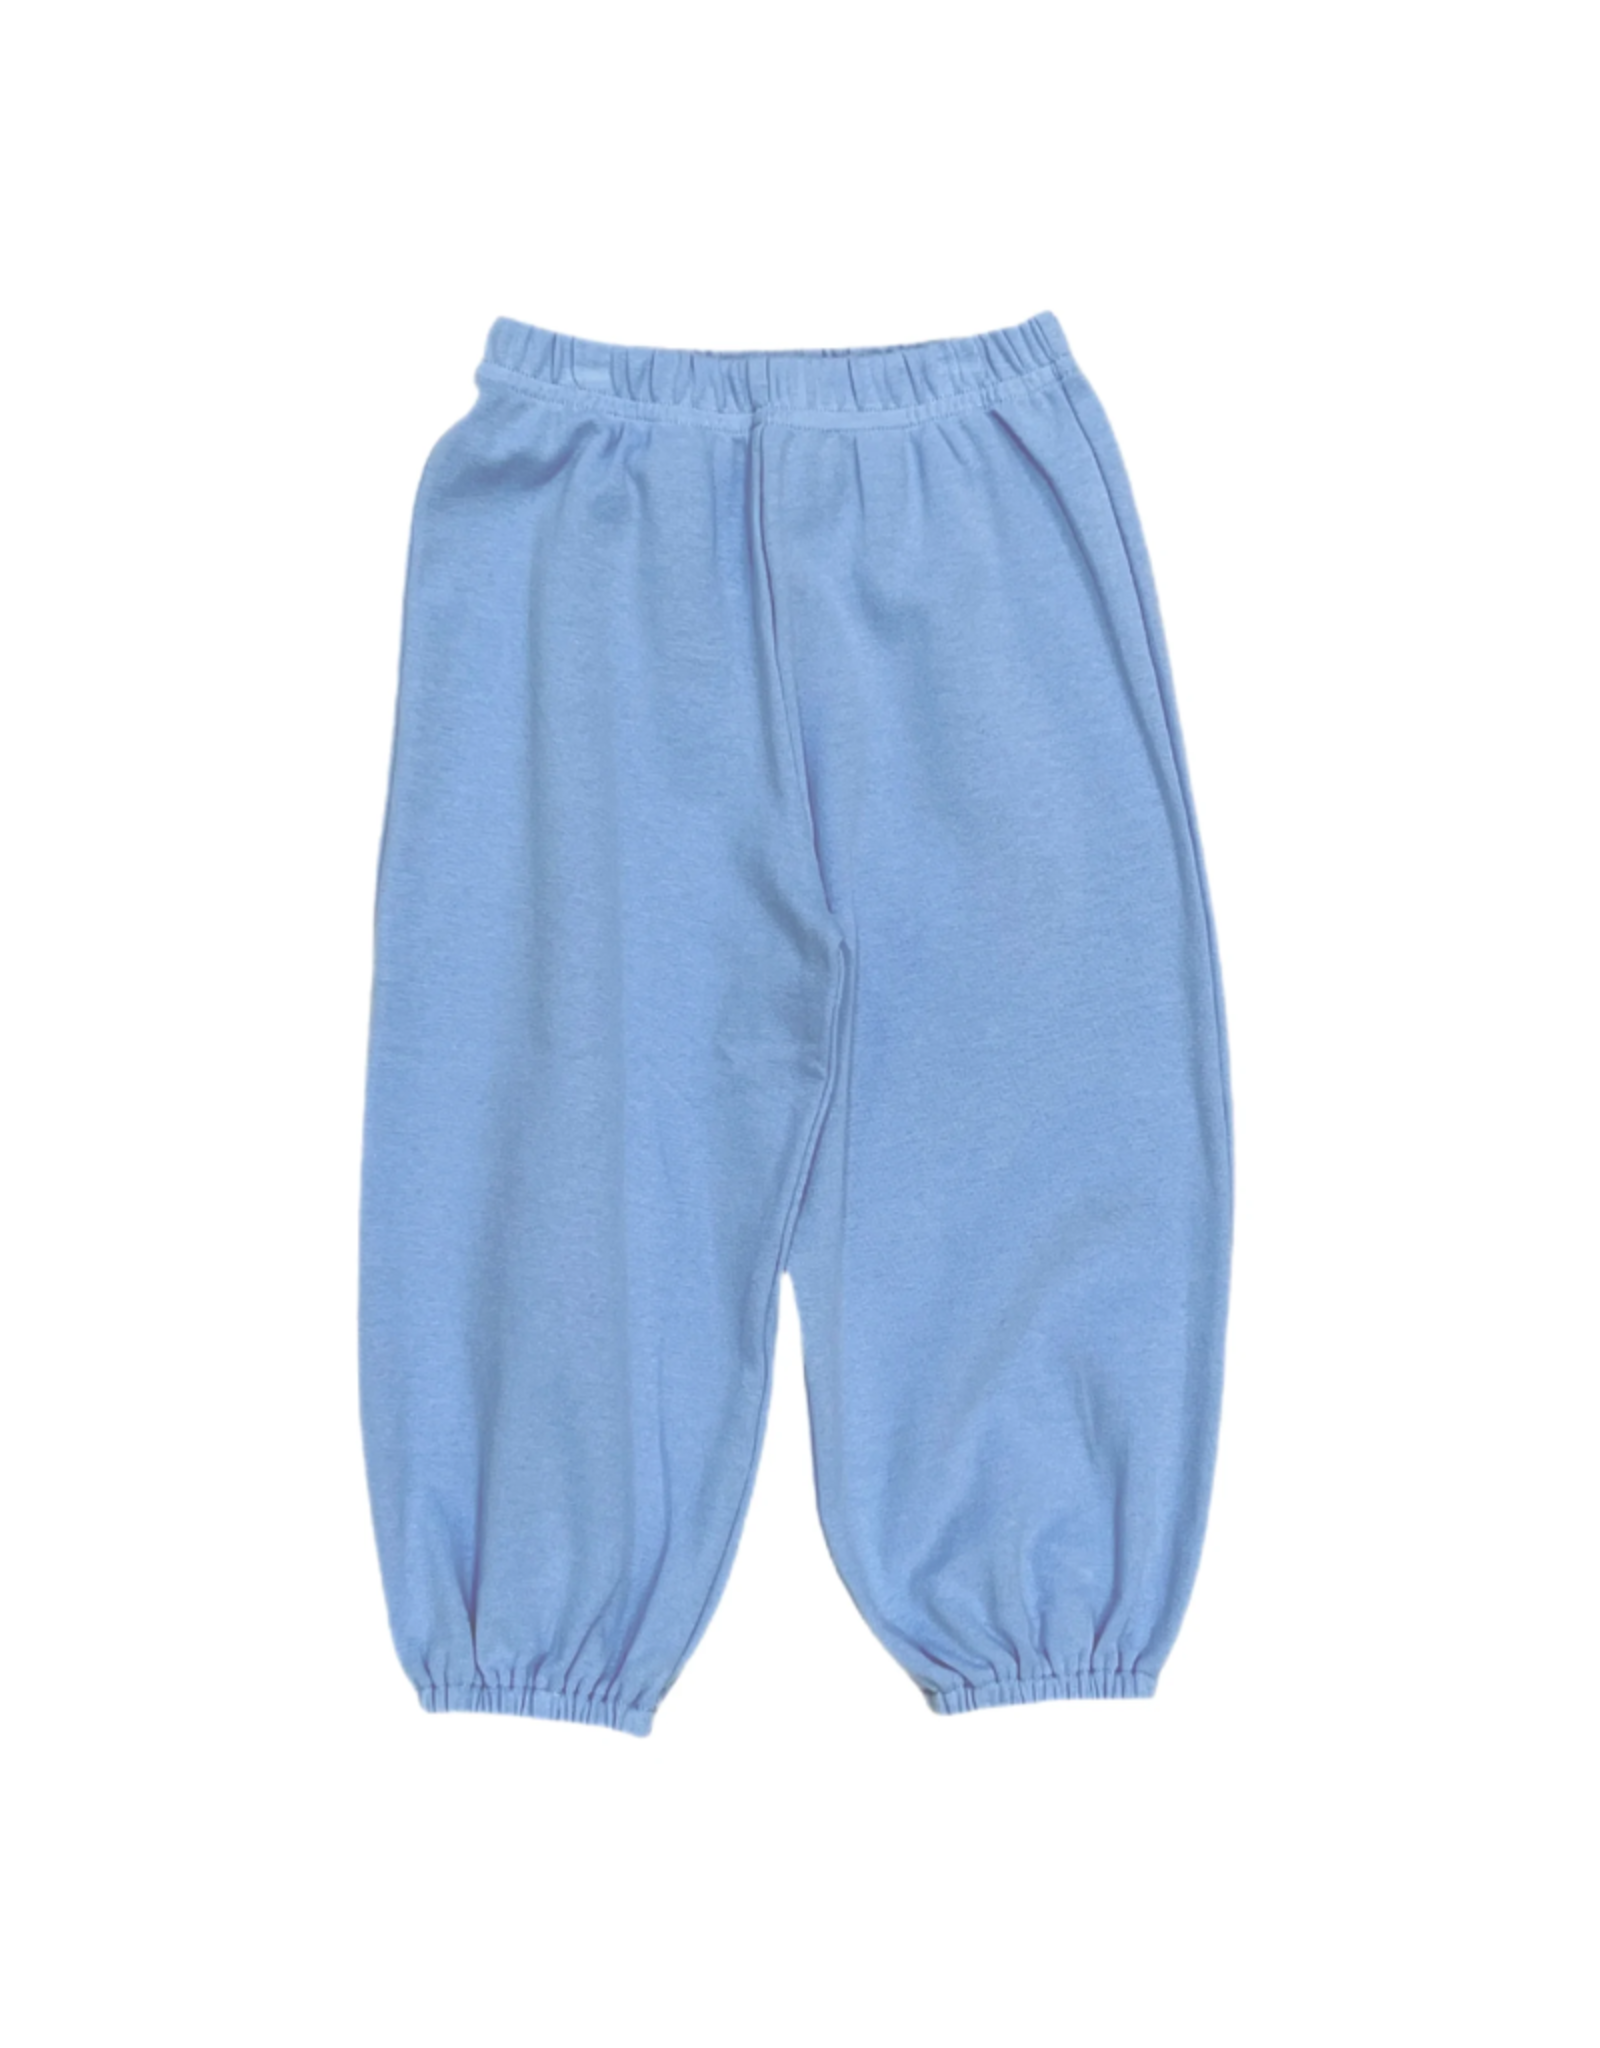 Luigi Knit Boy Bloomer Pants, Sky Blue